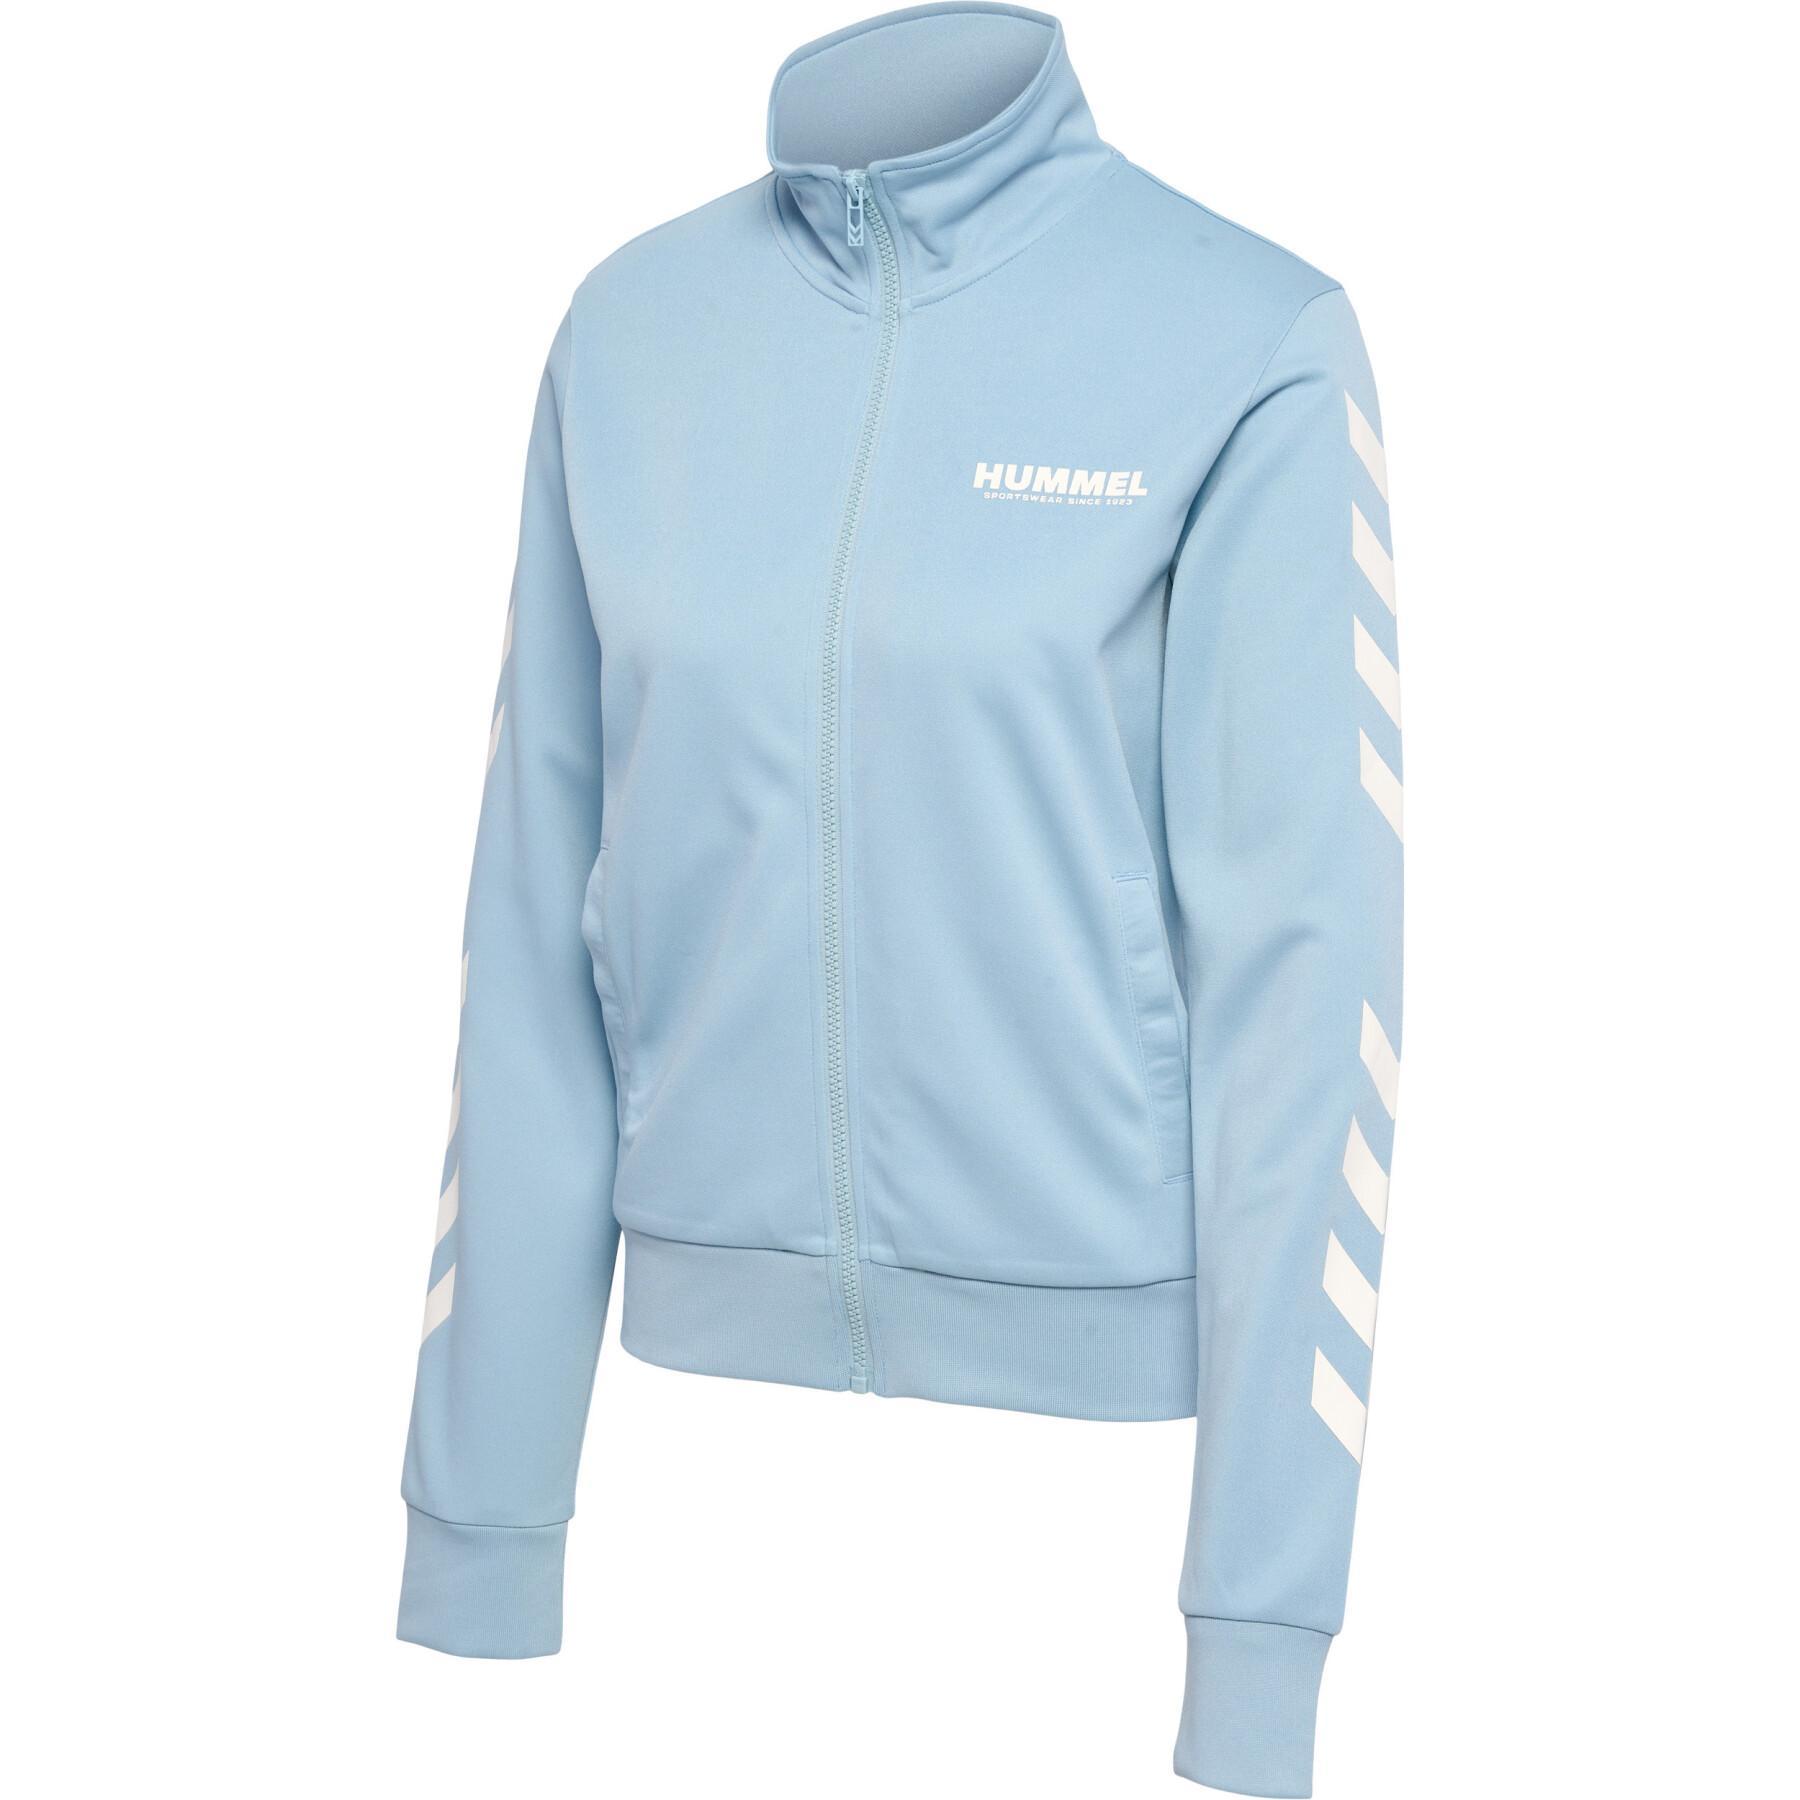 Women\'s zip-up tracksuit jacket Hummel Legacy - Hummel - Brands -  Volleyball wear | Übergangsjacken